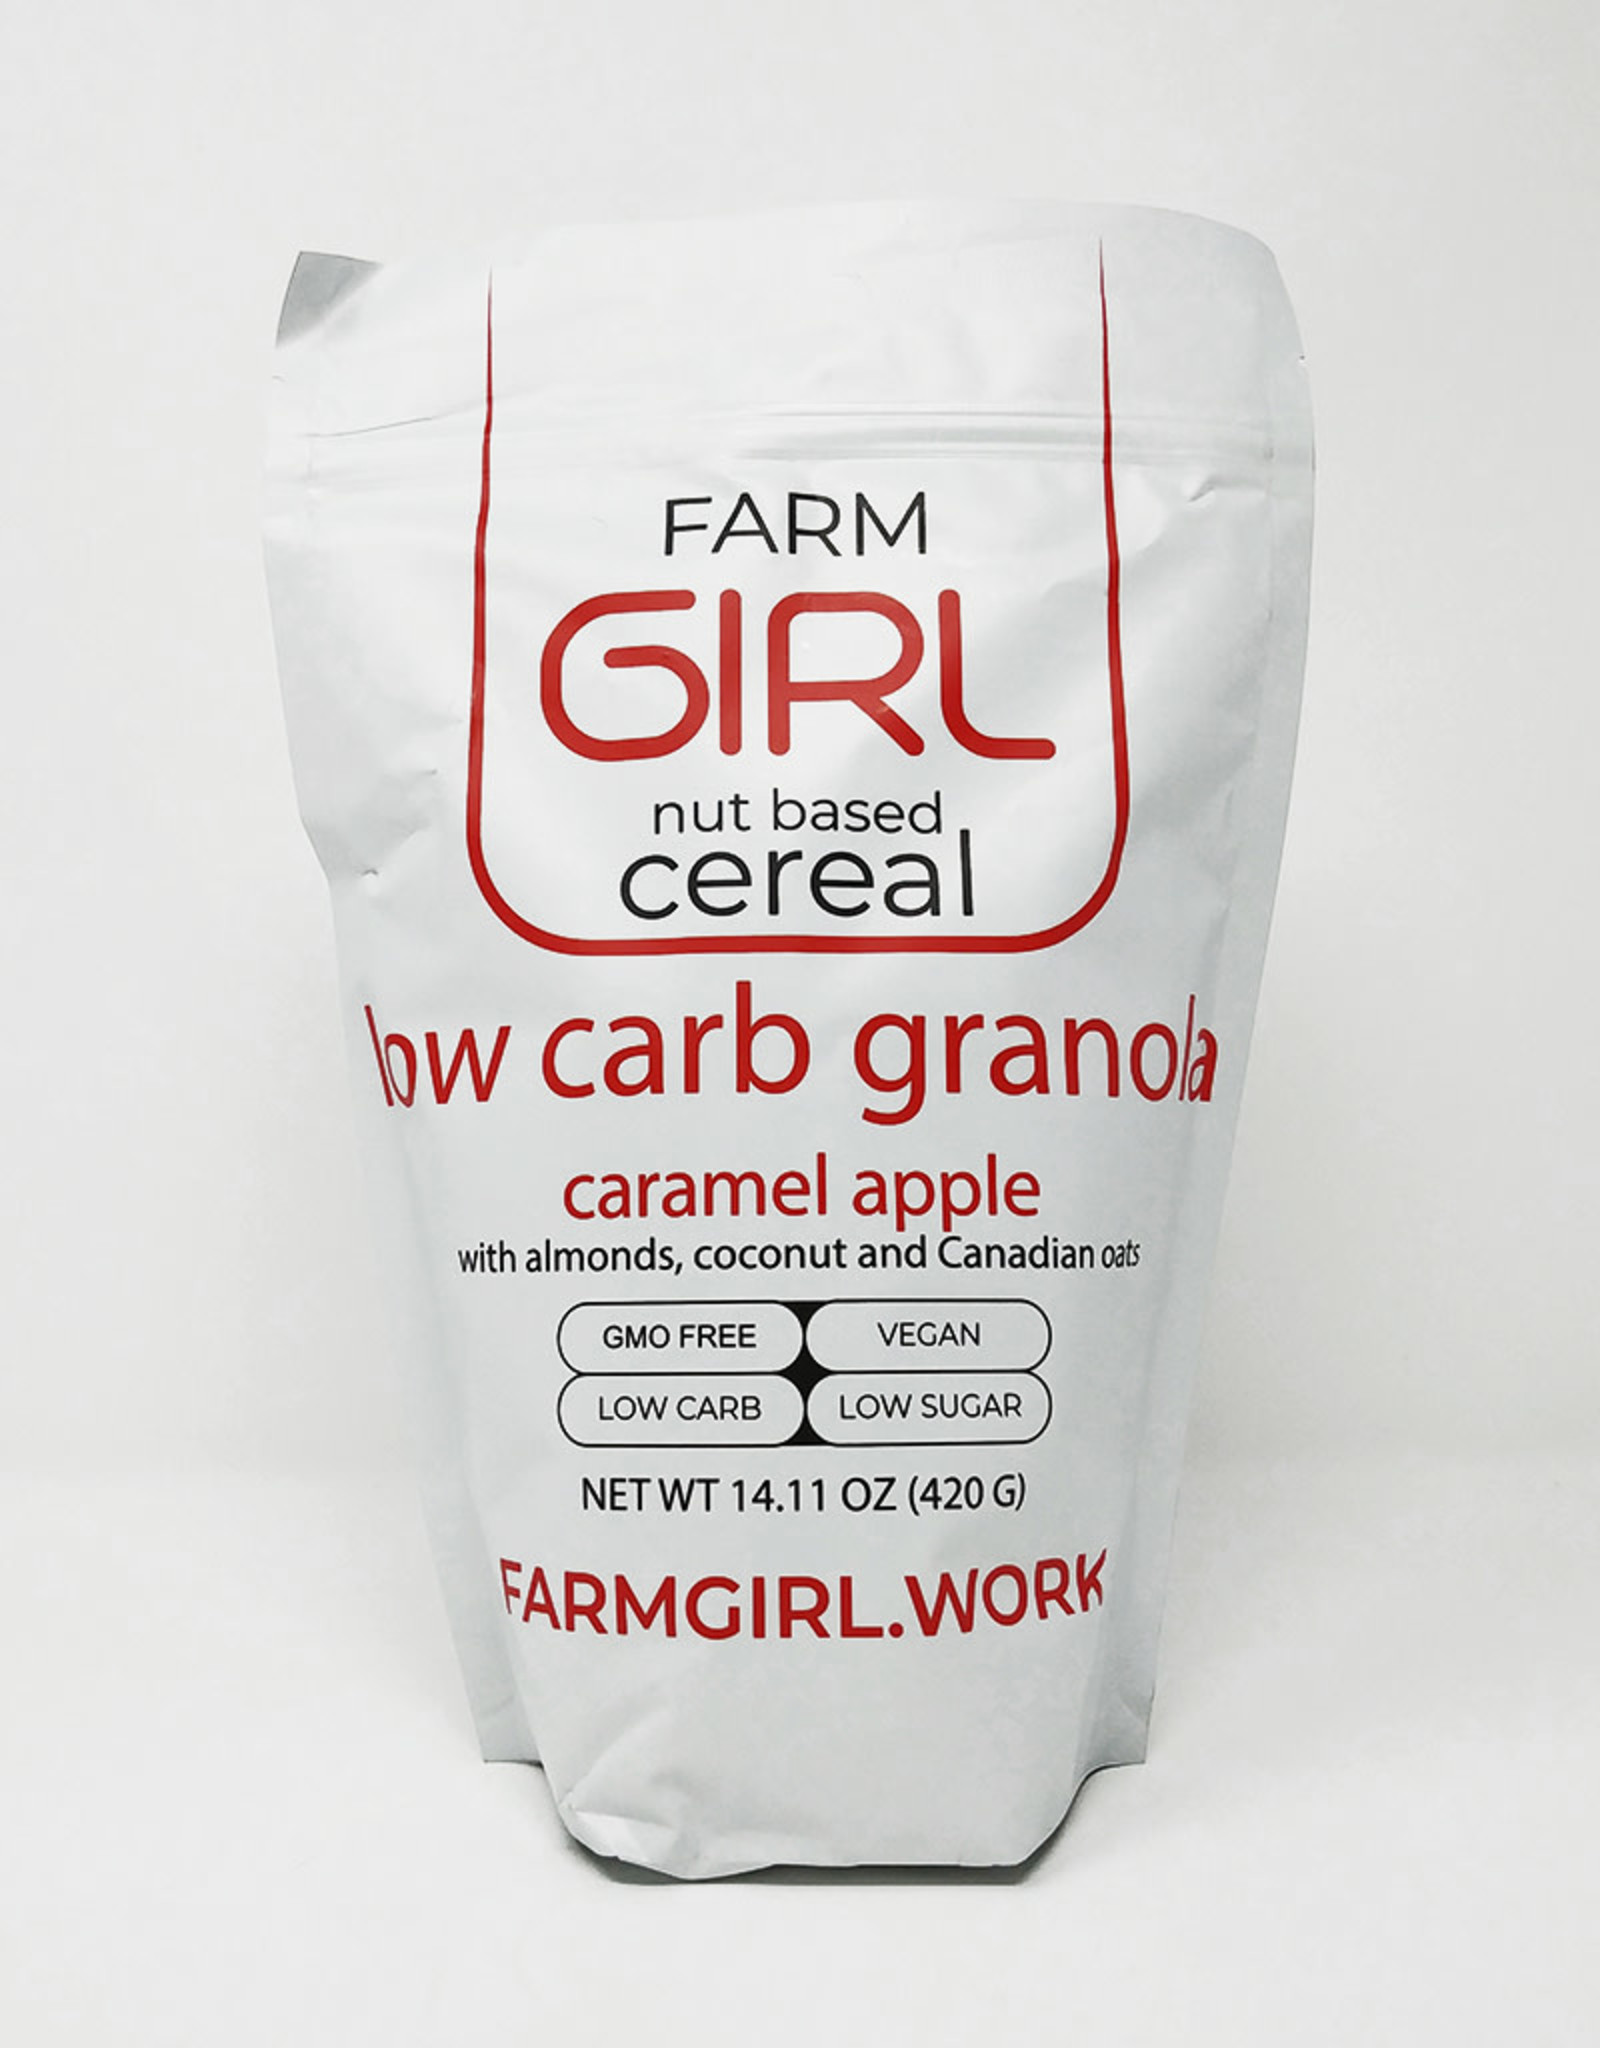 Farm Girl Farm Girl Cereal - Apple Caramel Granola (300g)